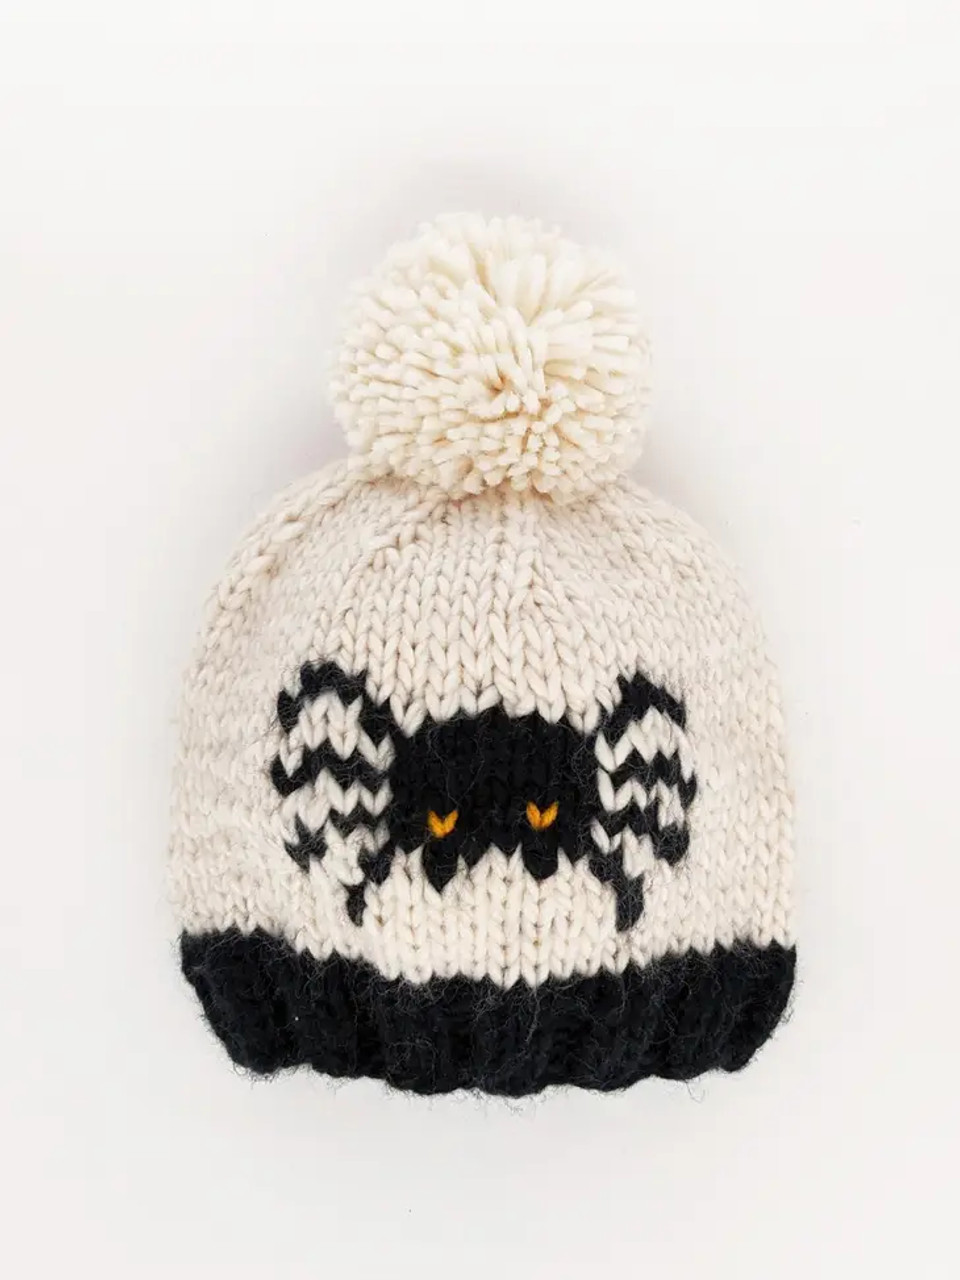 Huggalugs Winter White Pom Pom Knitted Beanie Hat